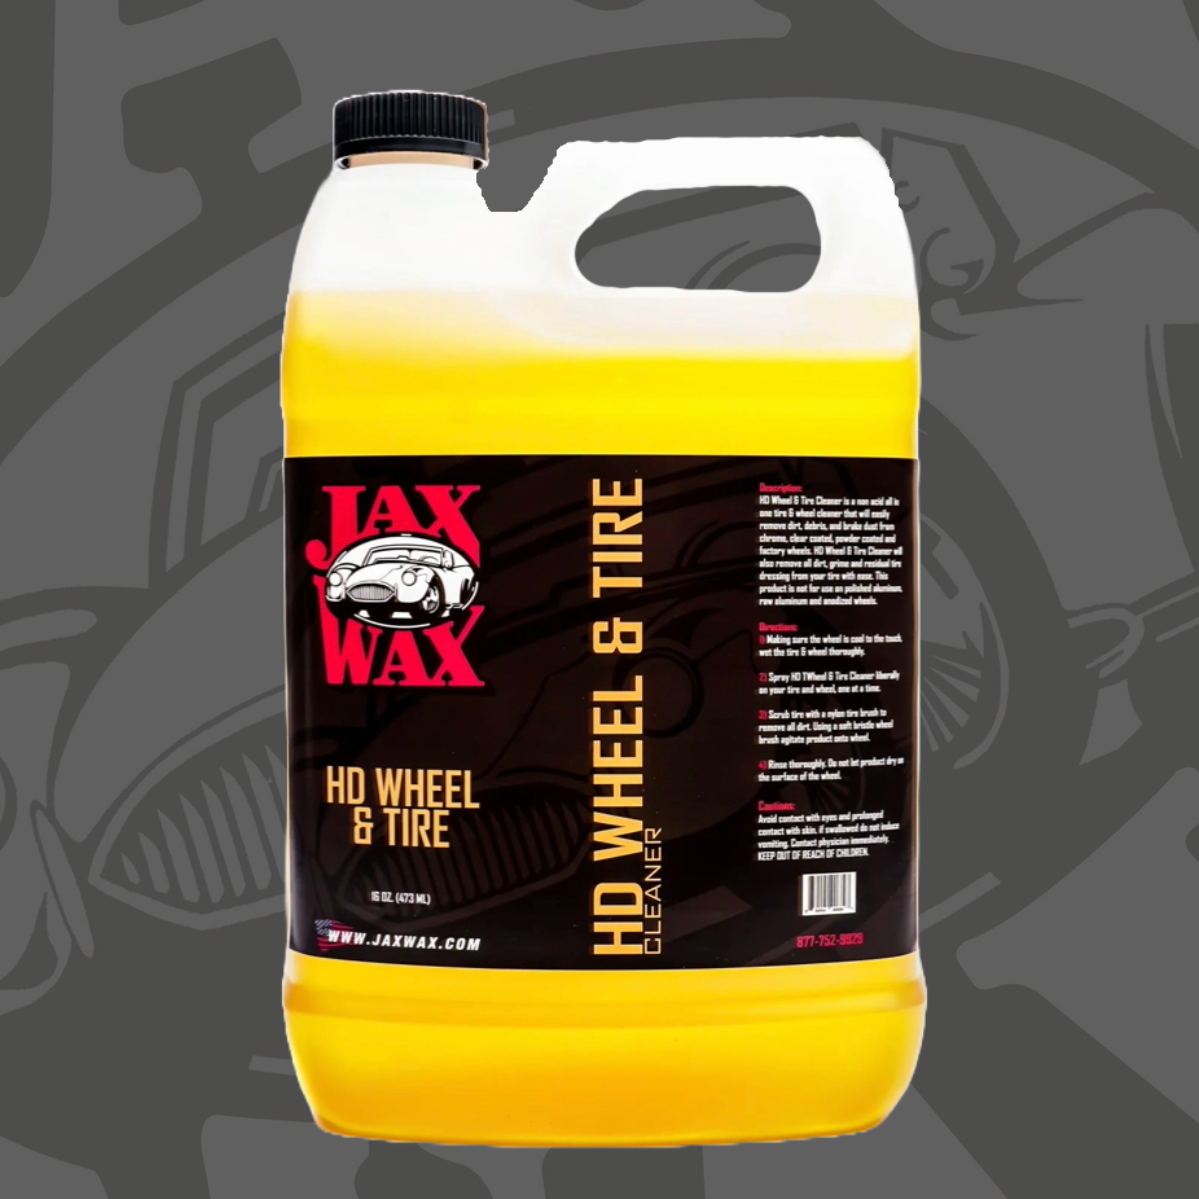 Jax Wax, HD Wheel & Tire Cleaner, Wheel Cleaner